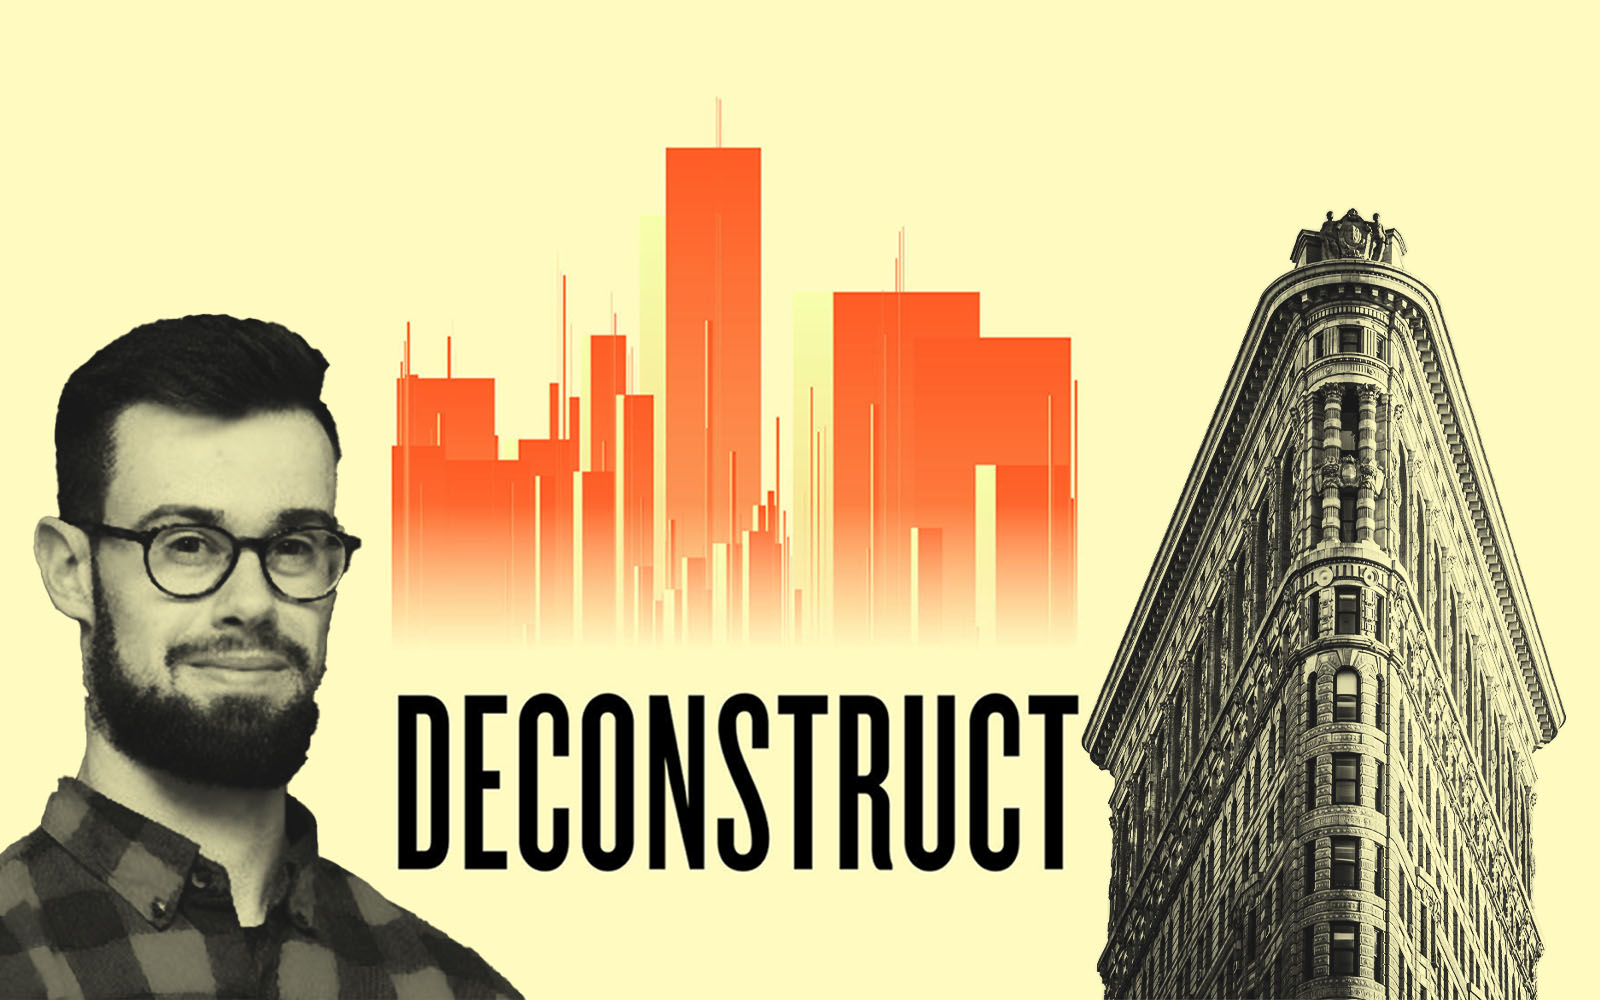 Deconstruct podcast goes inside the Flatiron flaker’s motives